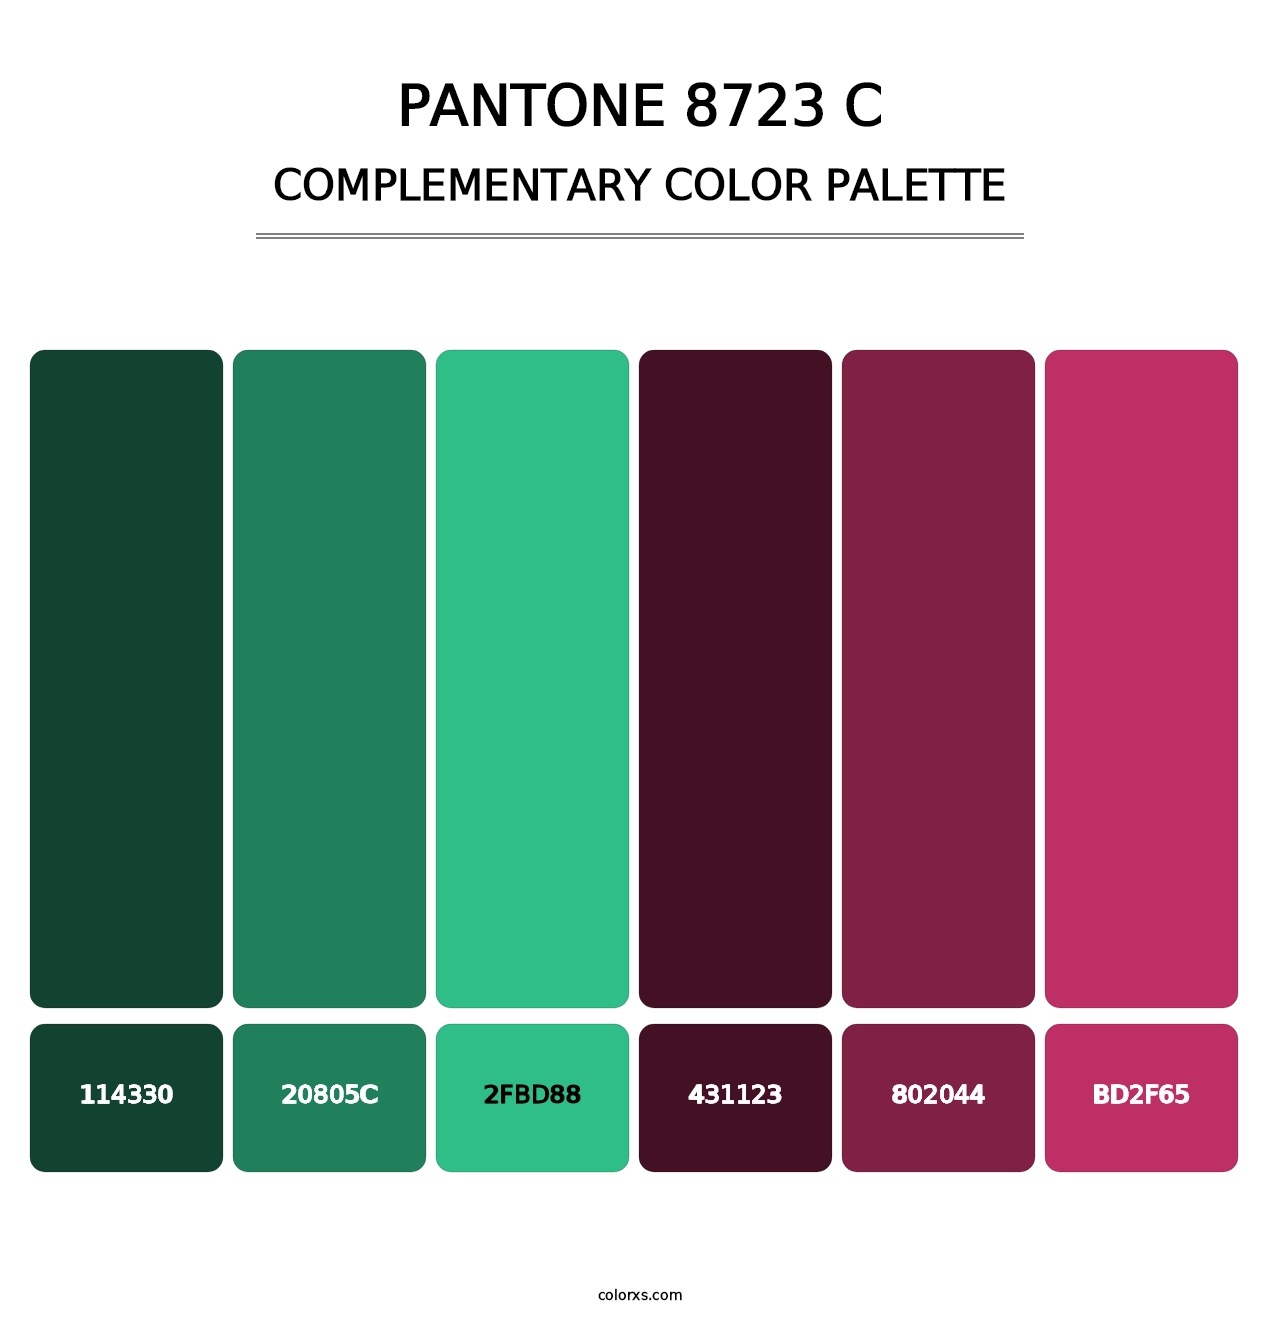 PANTONE 8723 C - Complementary Color Palette